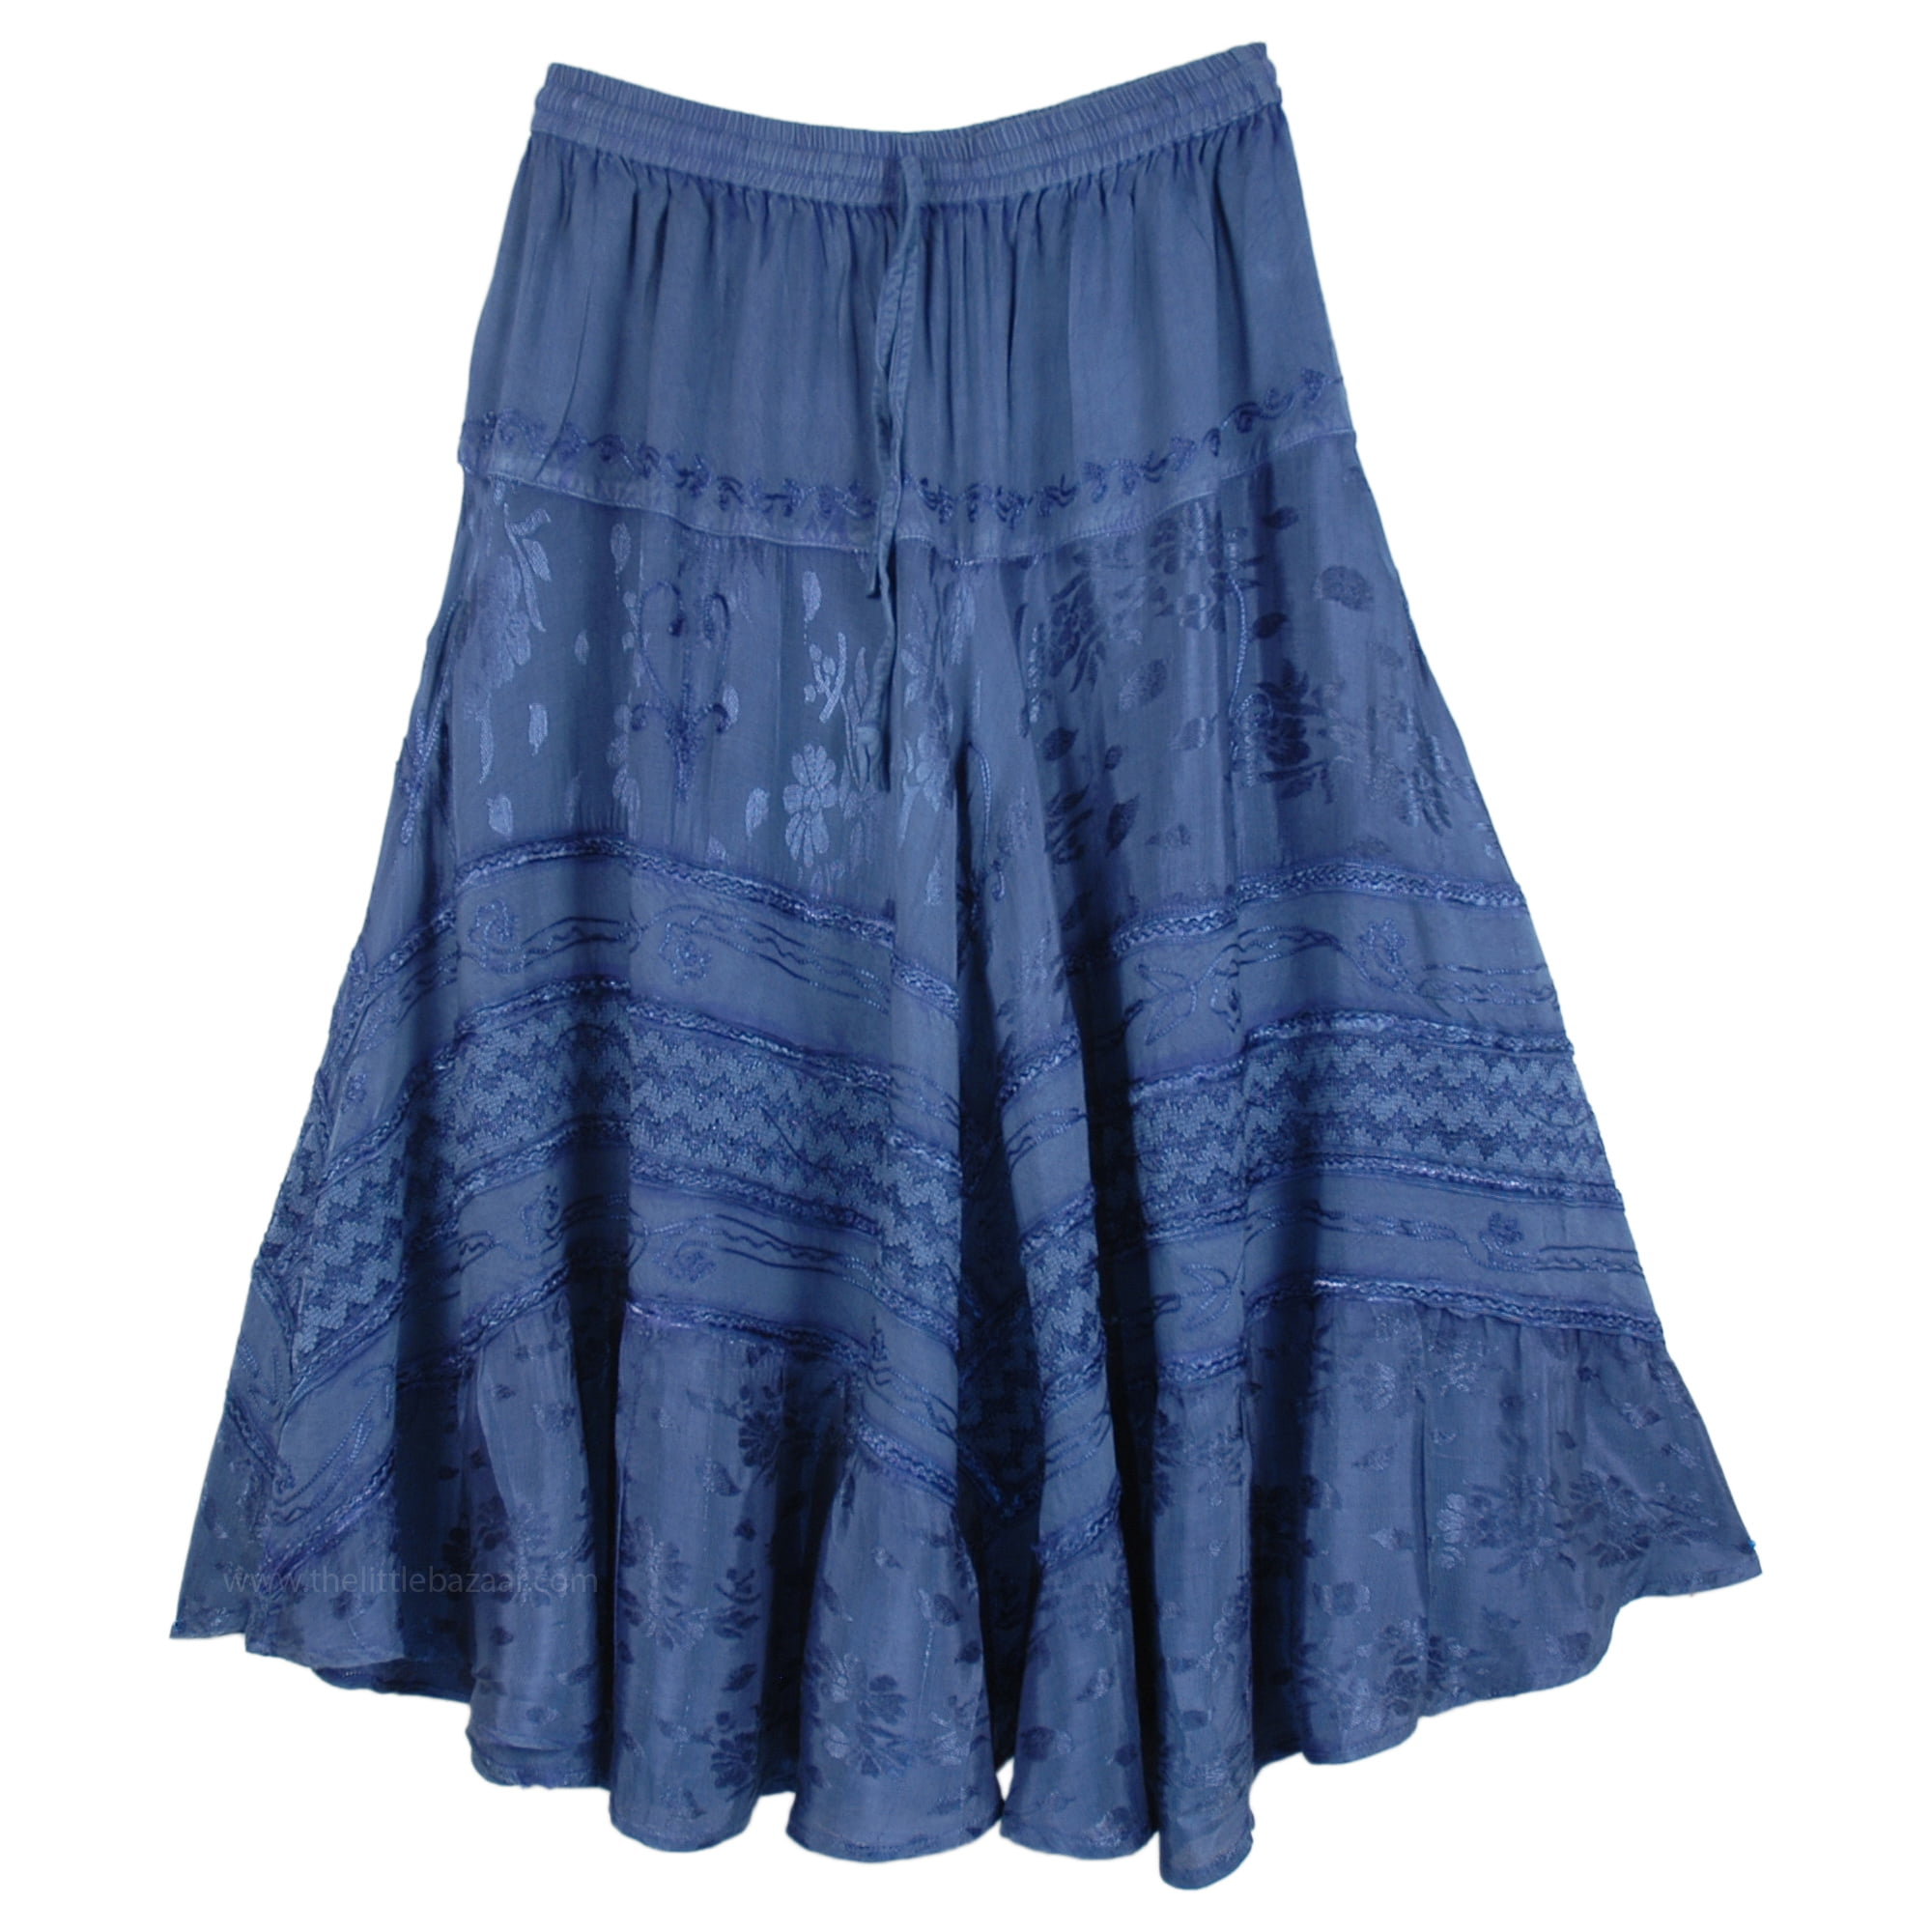 Medieval Midi Length Denim Blue Skirt in Rayon - Walmart.com